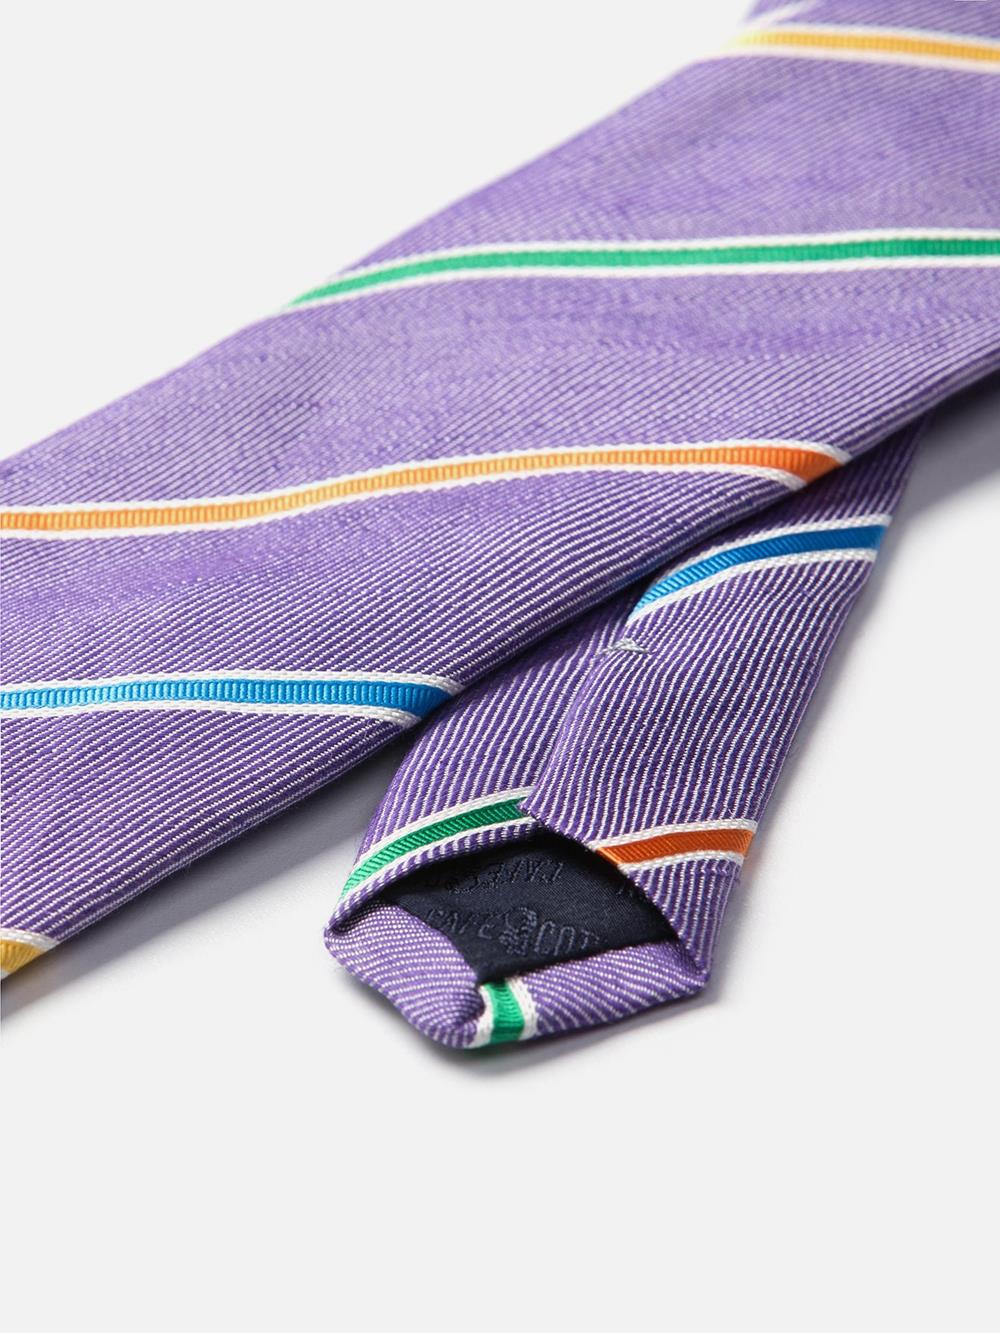 Silk tie and linen multicolored stripes parcel